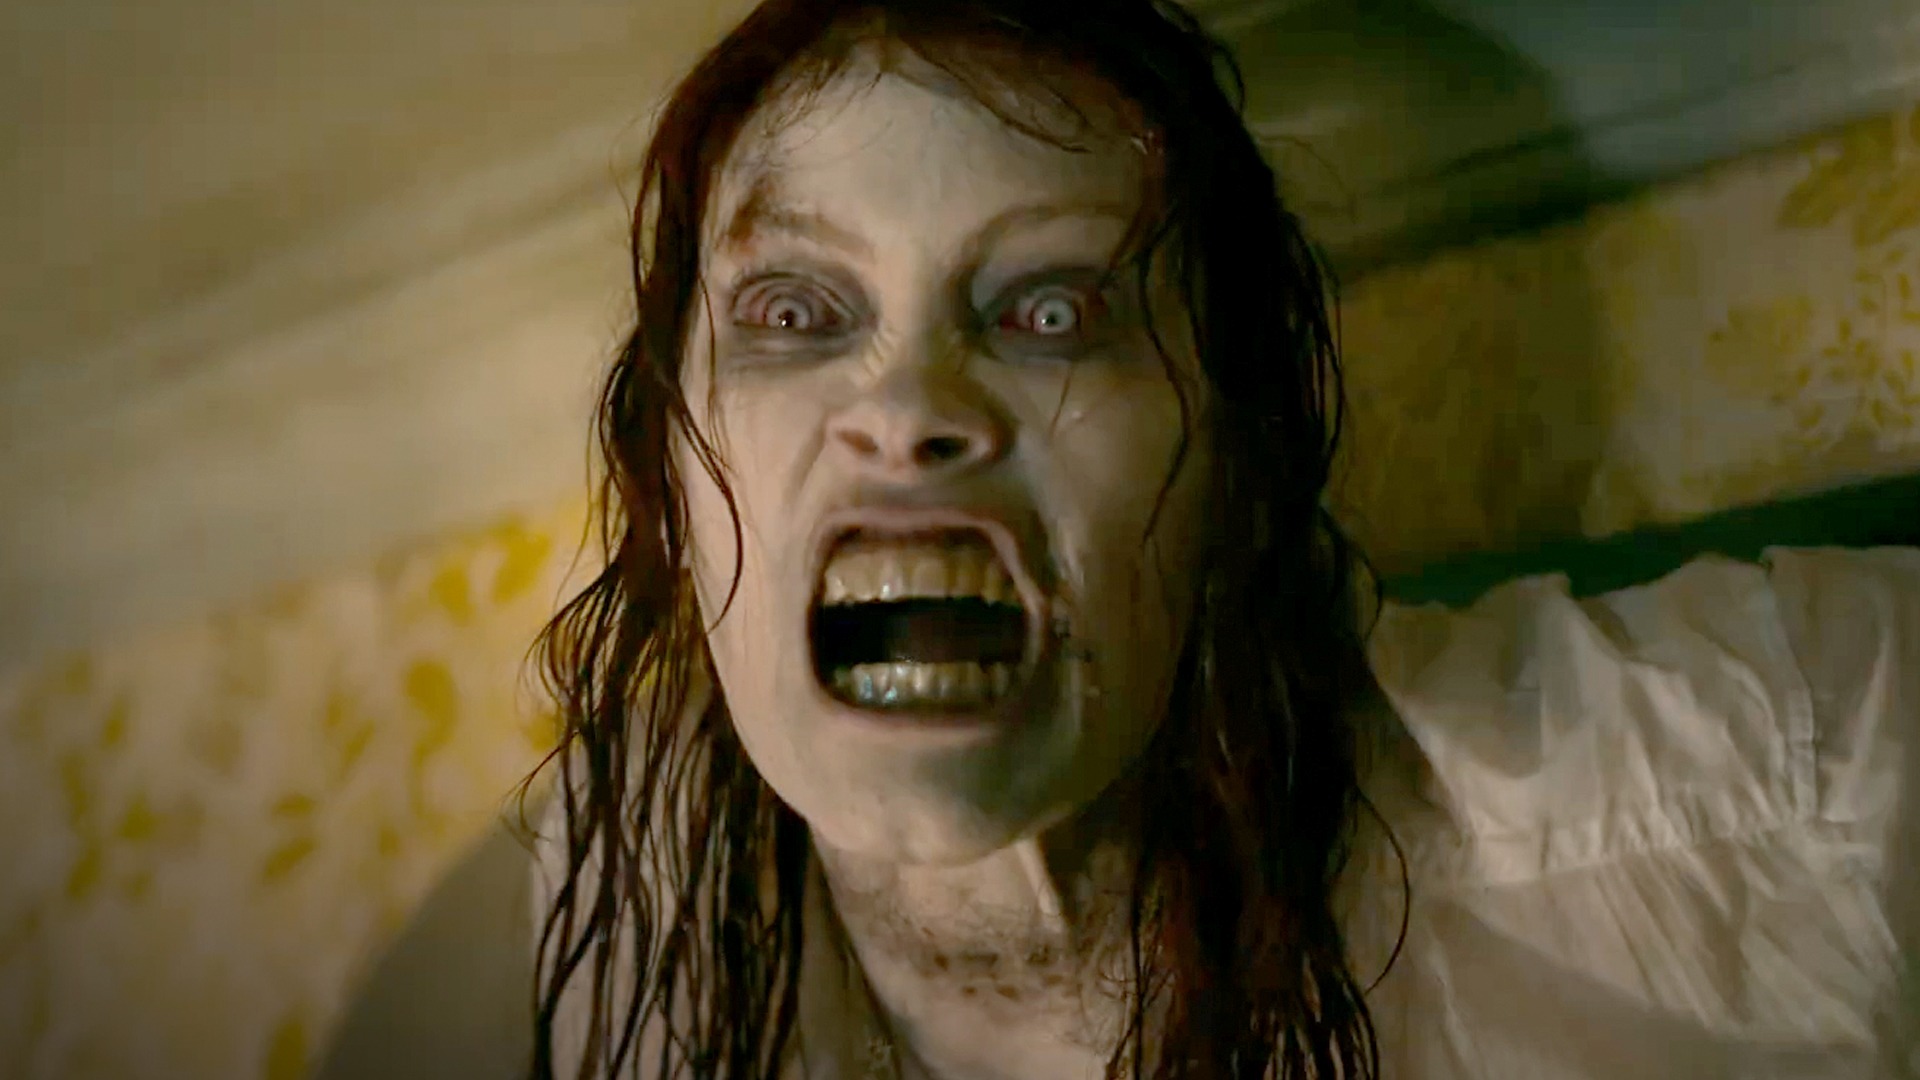 Brutal Final Trailer For EVIL DEAD RISE Offers Up Some Insane New